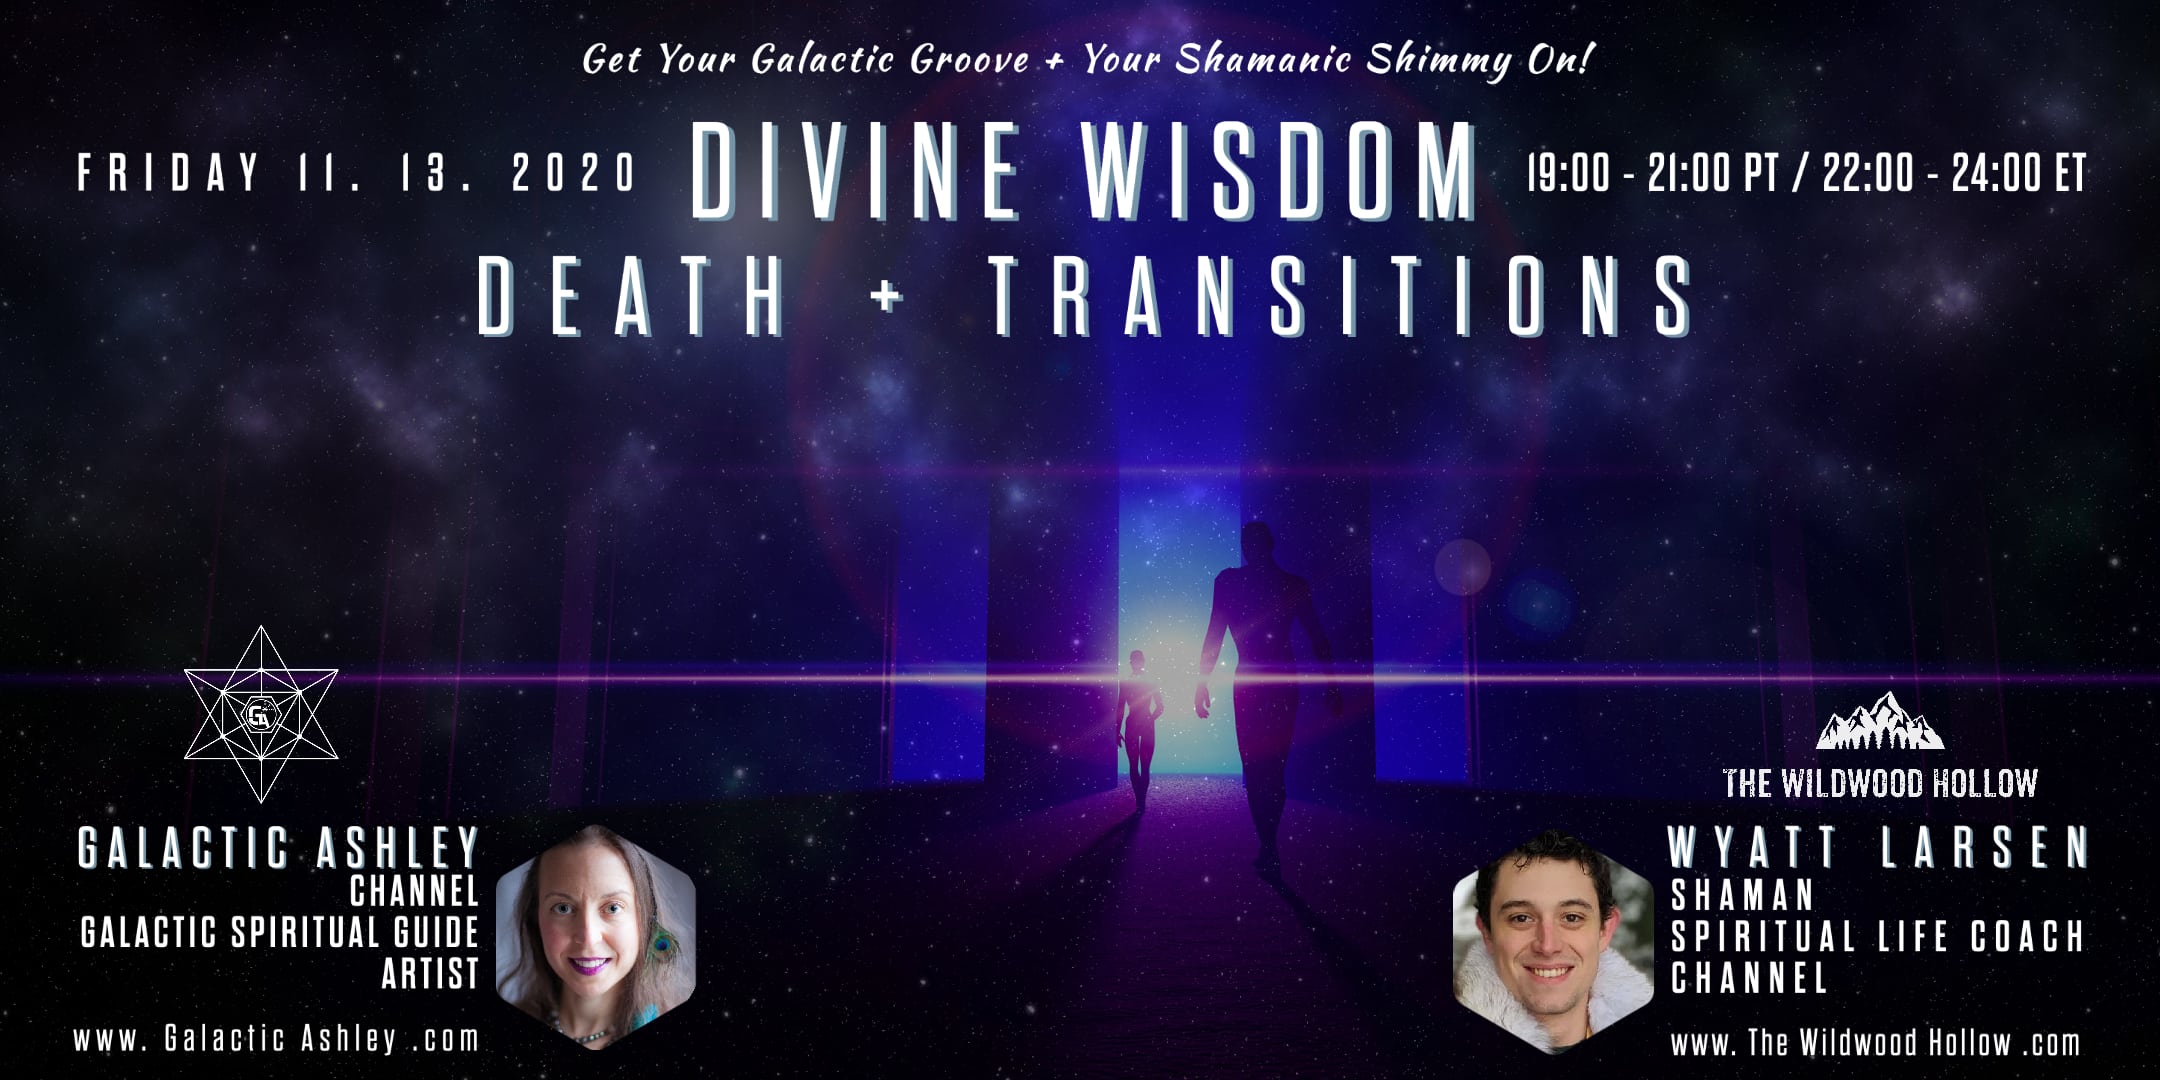 DIVINE WISDOM: DEATH + TRANSITIONS